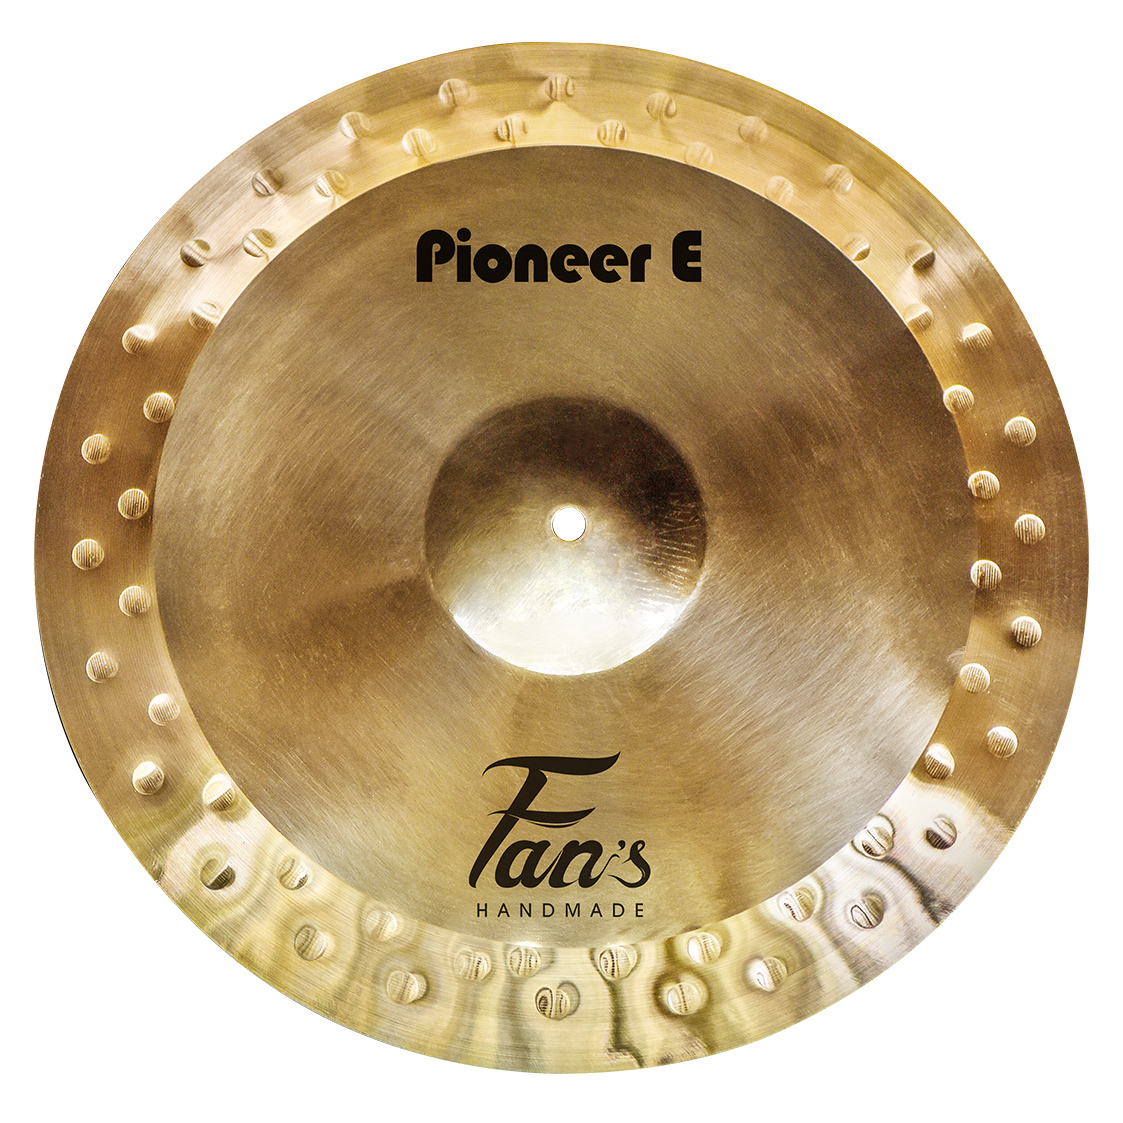 Pioneer E - Jinan FanSi Musical Instrument Co., Ltd.